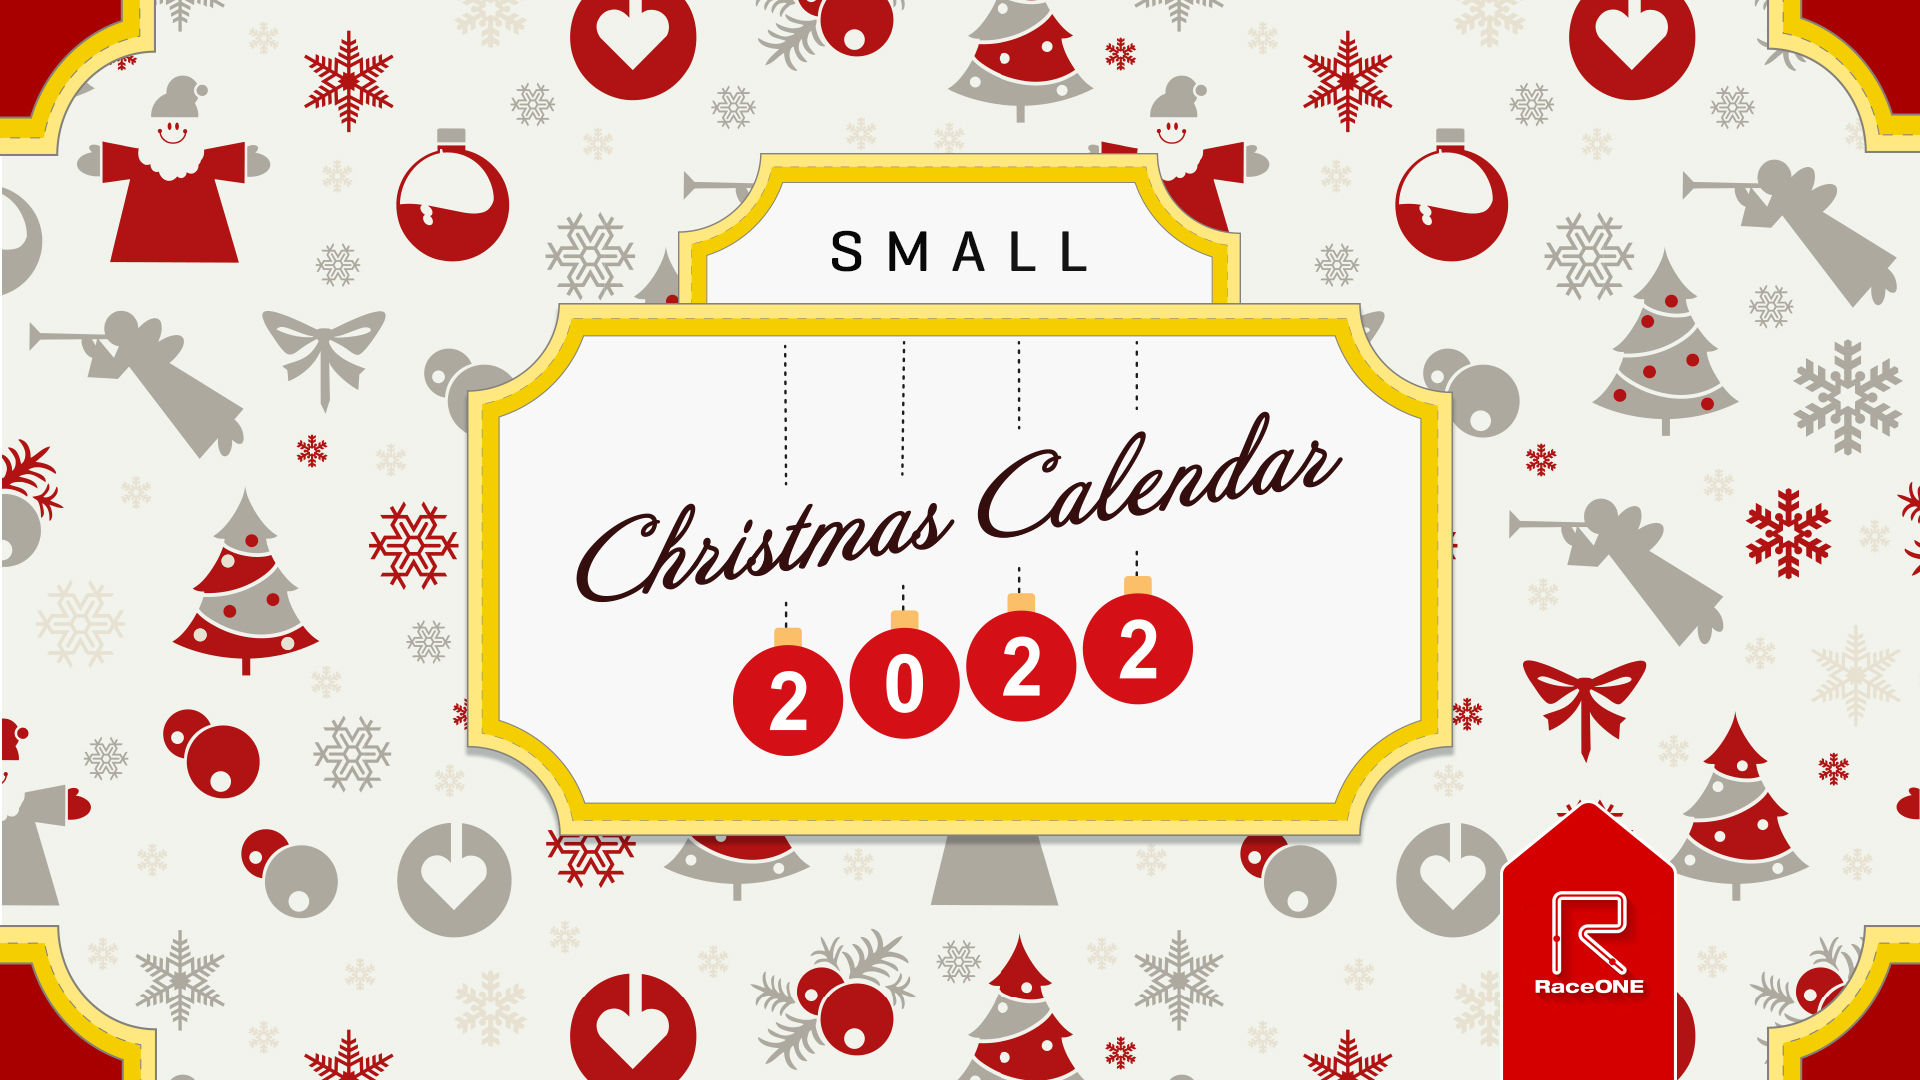 Christmas Calendar 2022 - Small #4